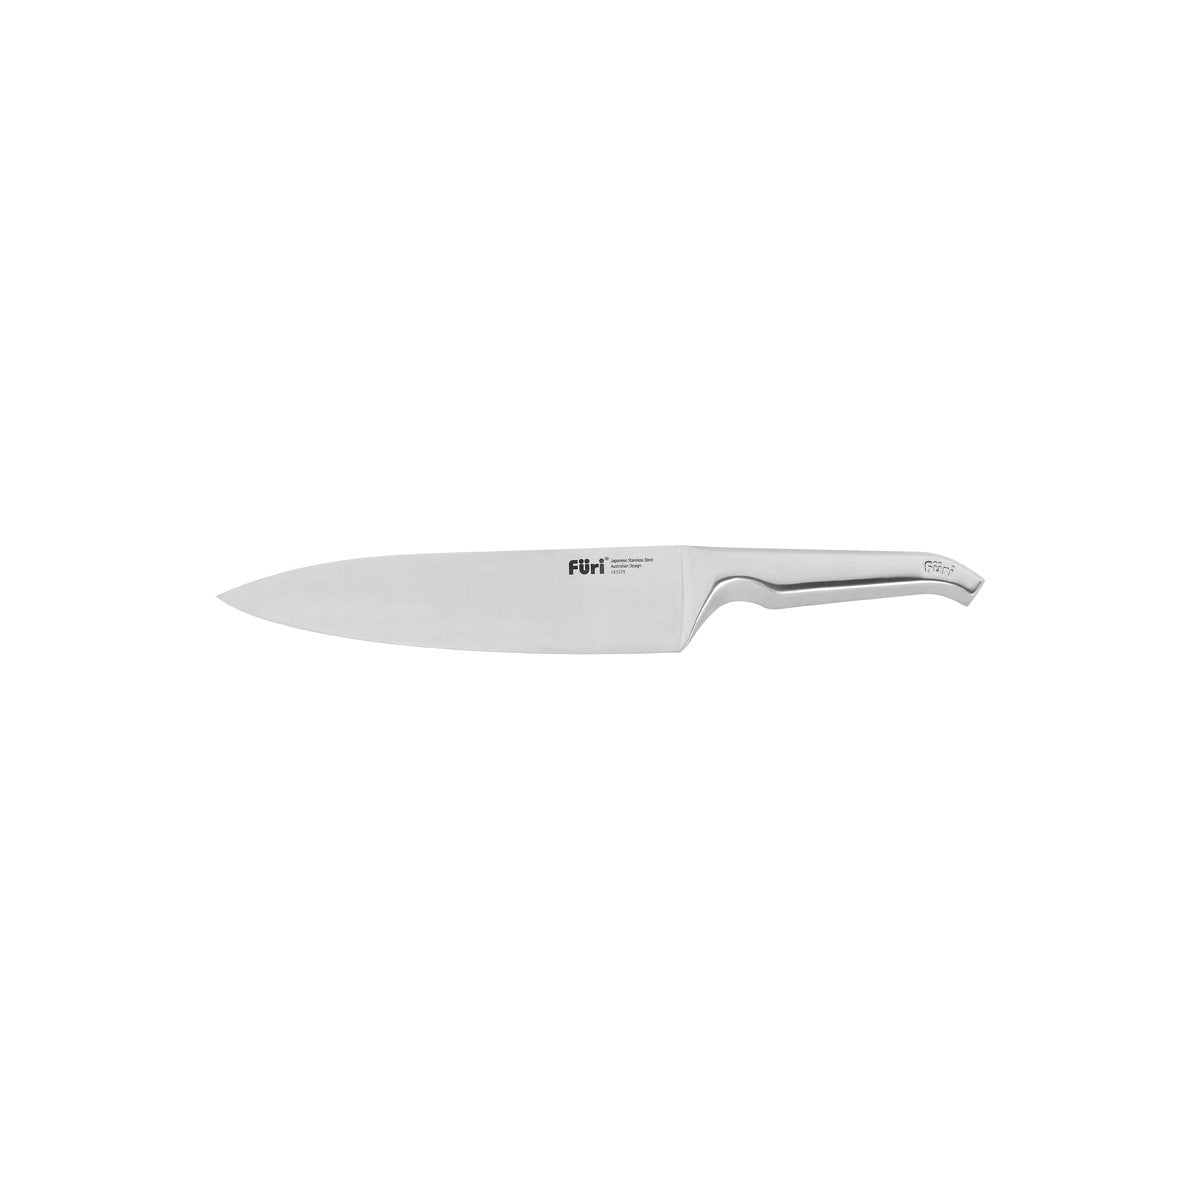 27194 Furi Pro Cooks Knife 200mm Tomkin Australia Hospitality Supplies